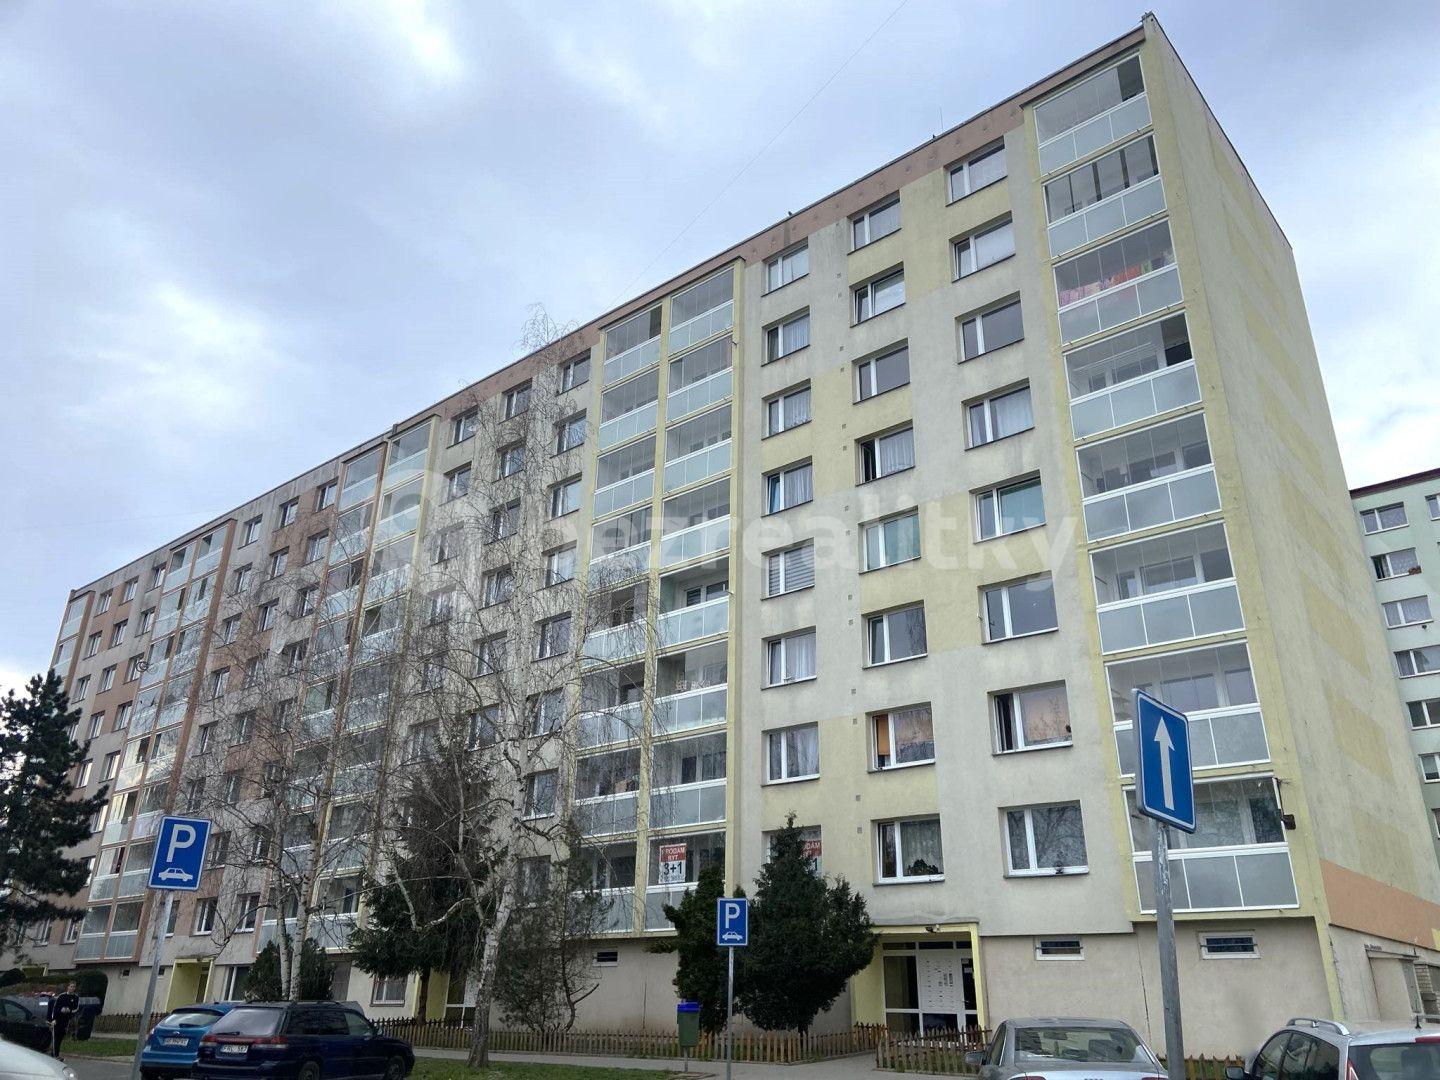 3 bedroom flat for sale, 79 m², Karla Čapka, Krupka, Ústecký Region